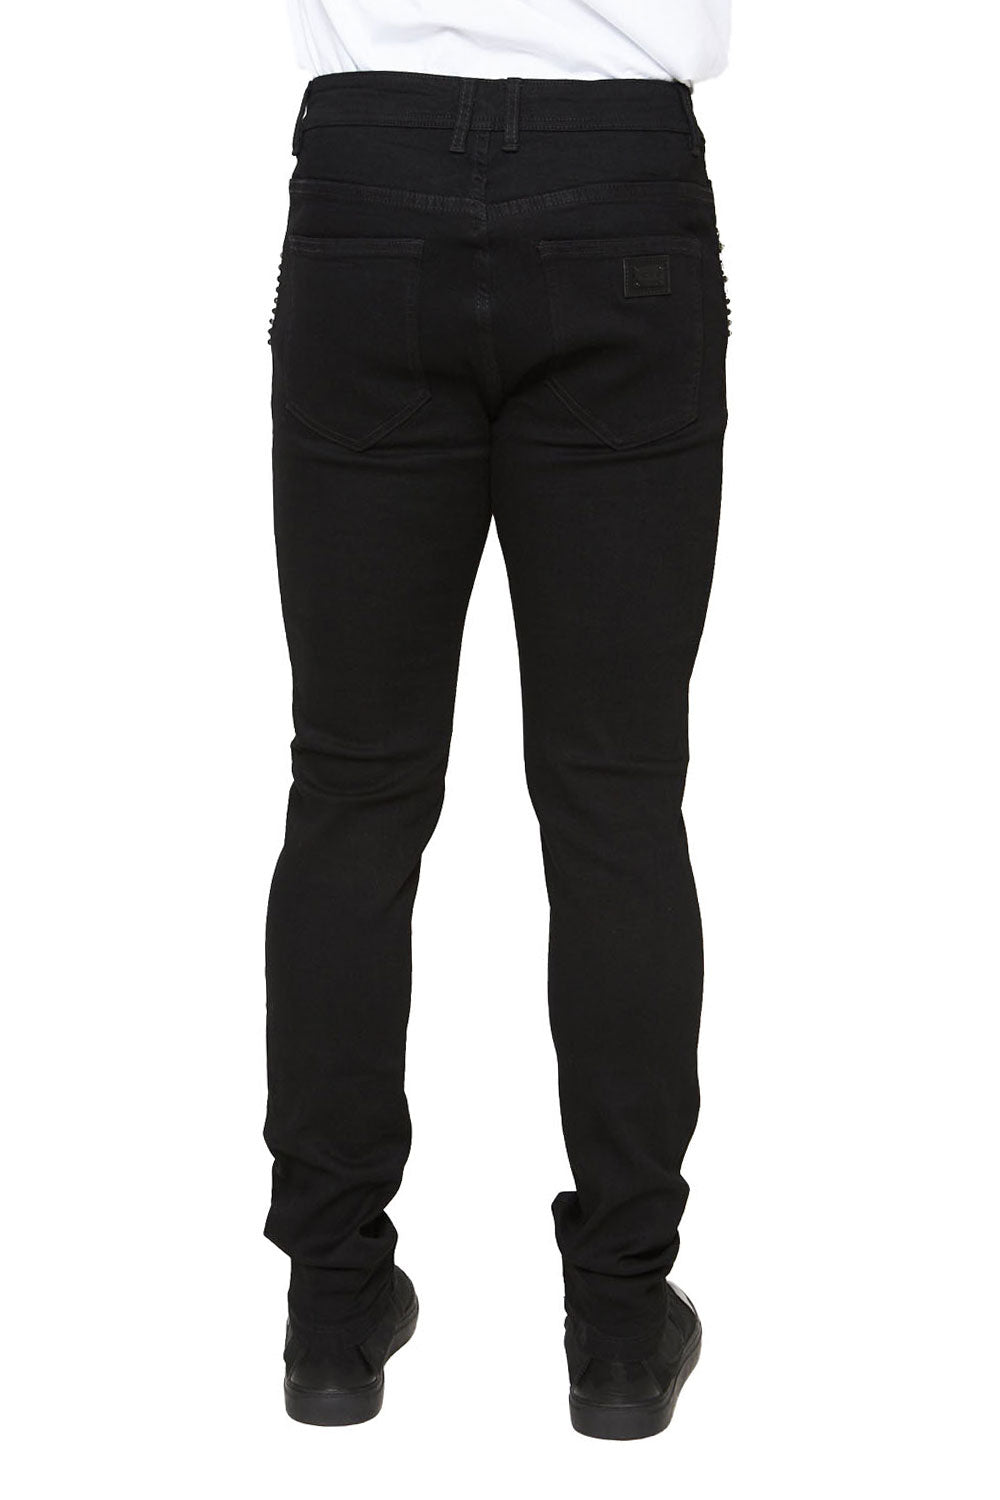 BARABAS Men's Rhinestone Slim Fit Black Denim Jeans SN8854 